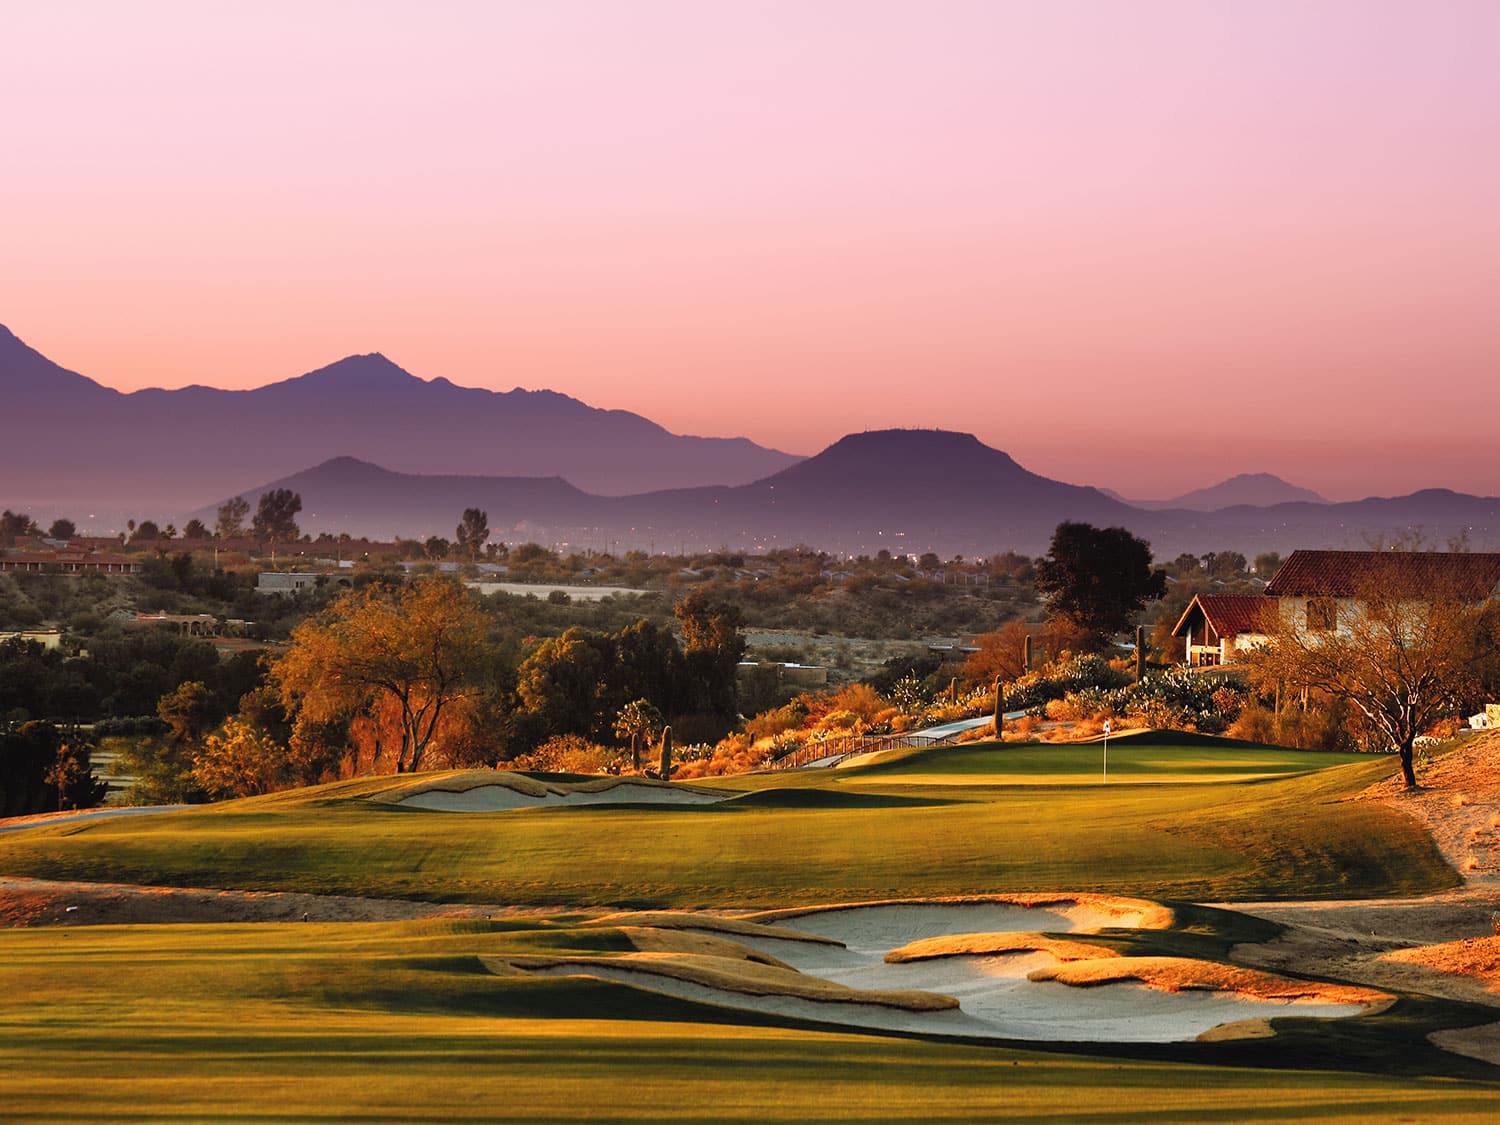 The Catalina Golf Course at Omni Tucson National Resort in Arizona.